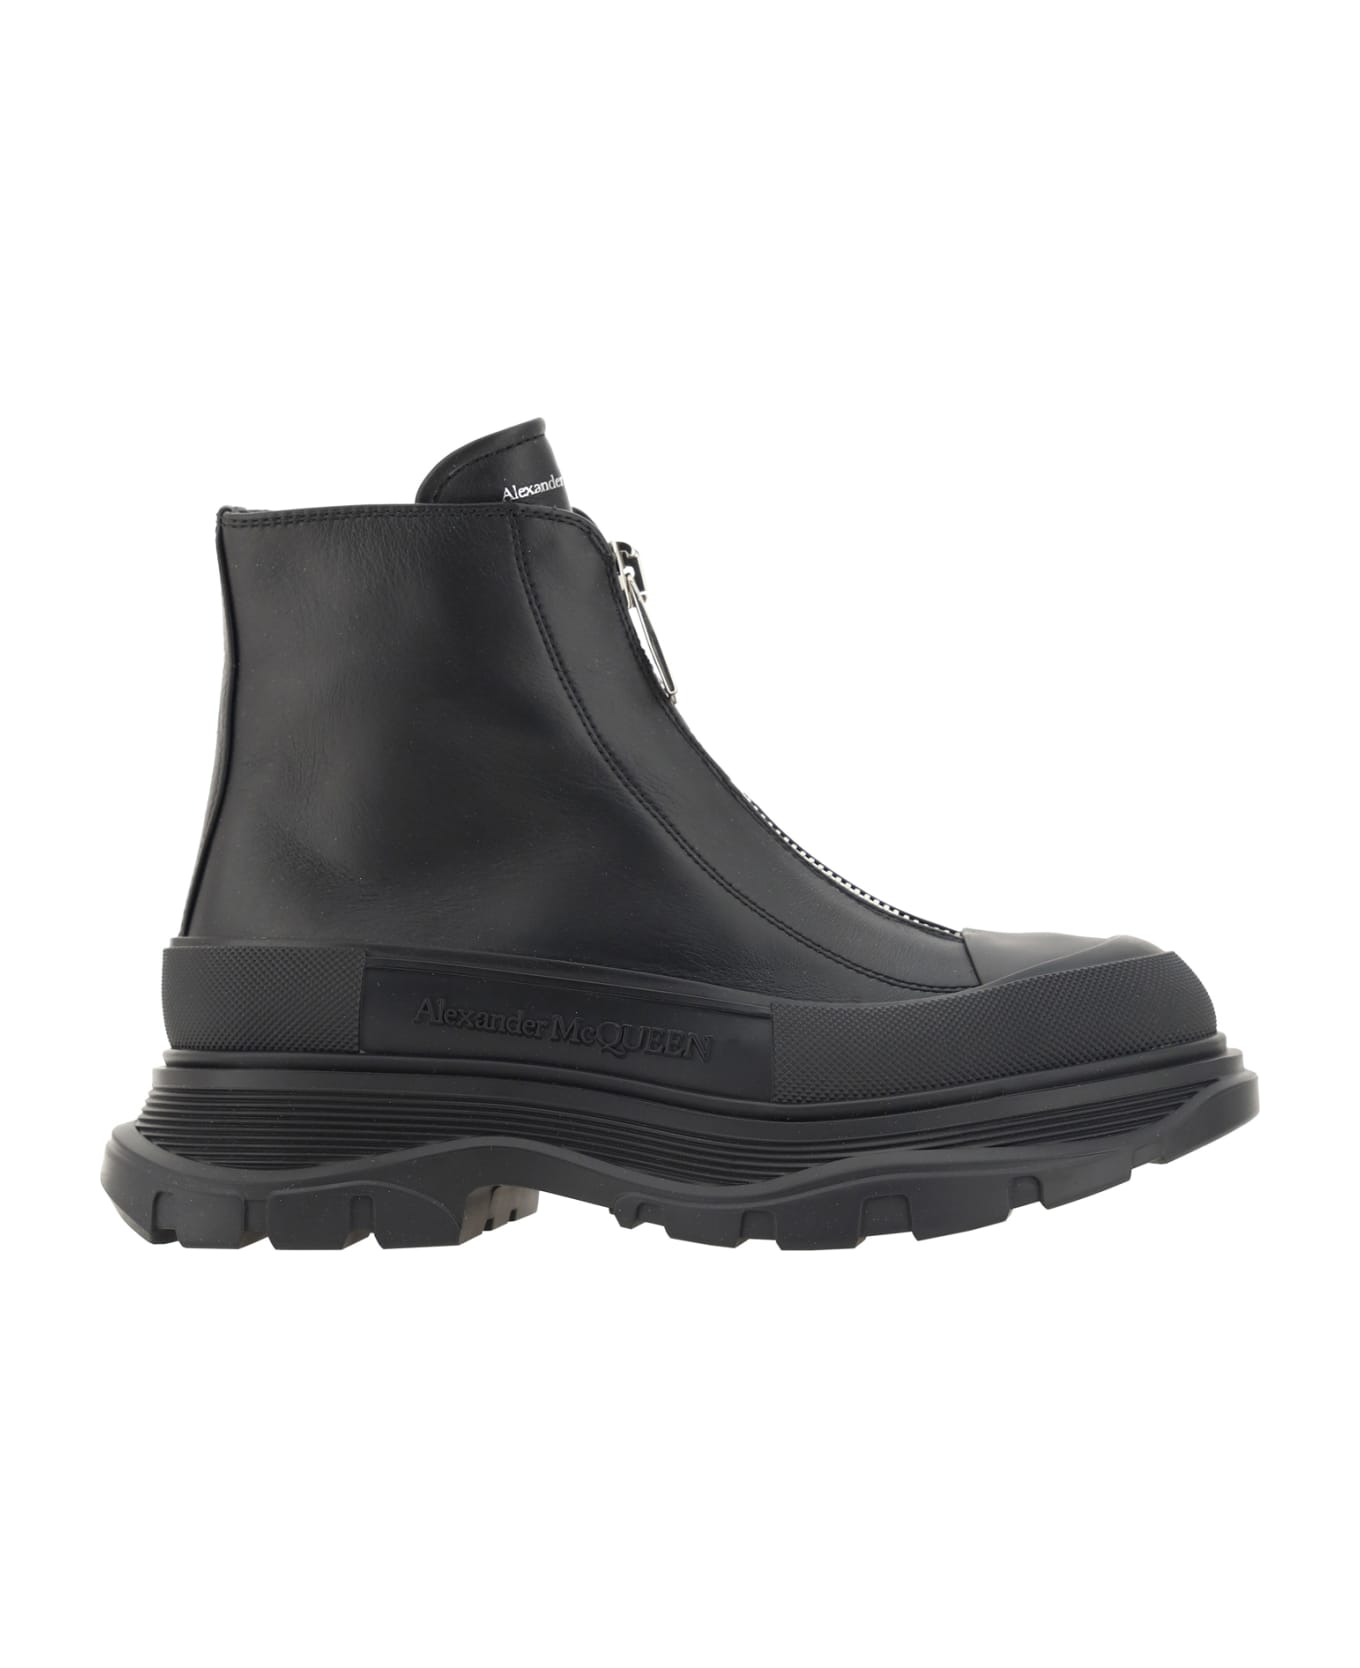 Alexander McQueen Ankle Boots - Black/black